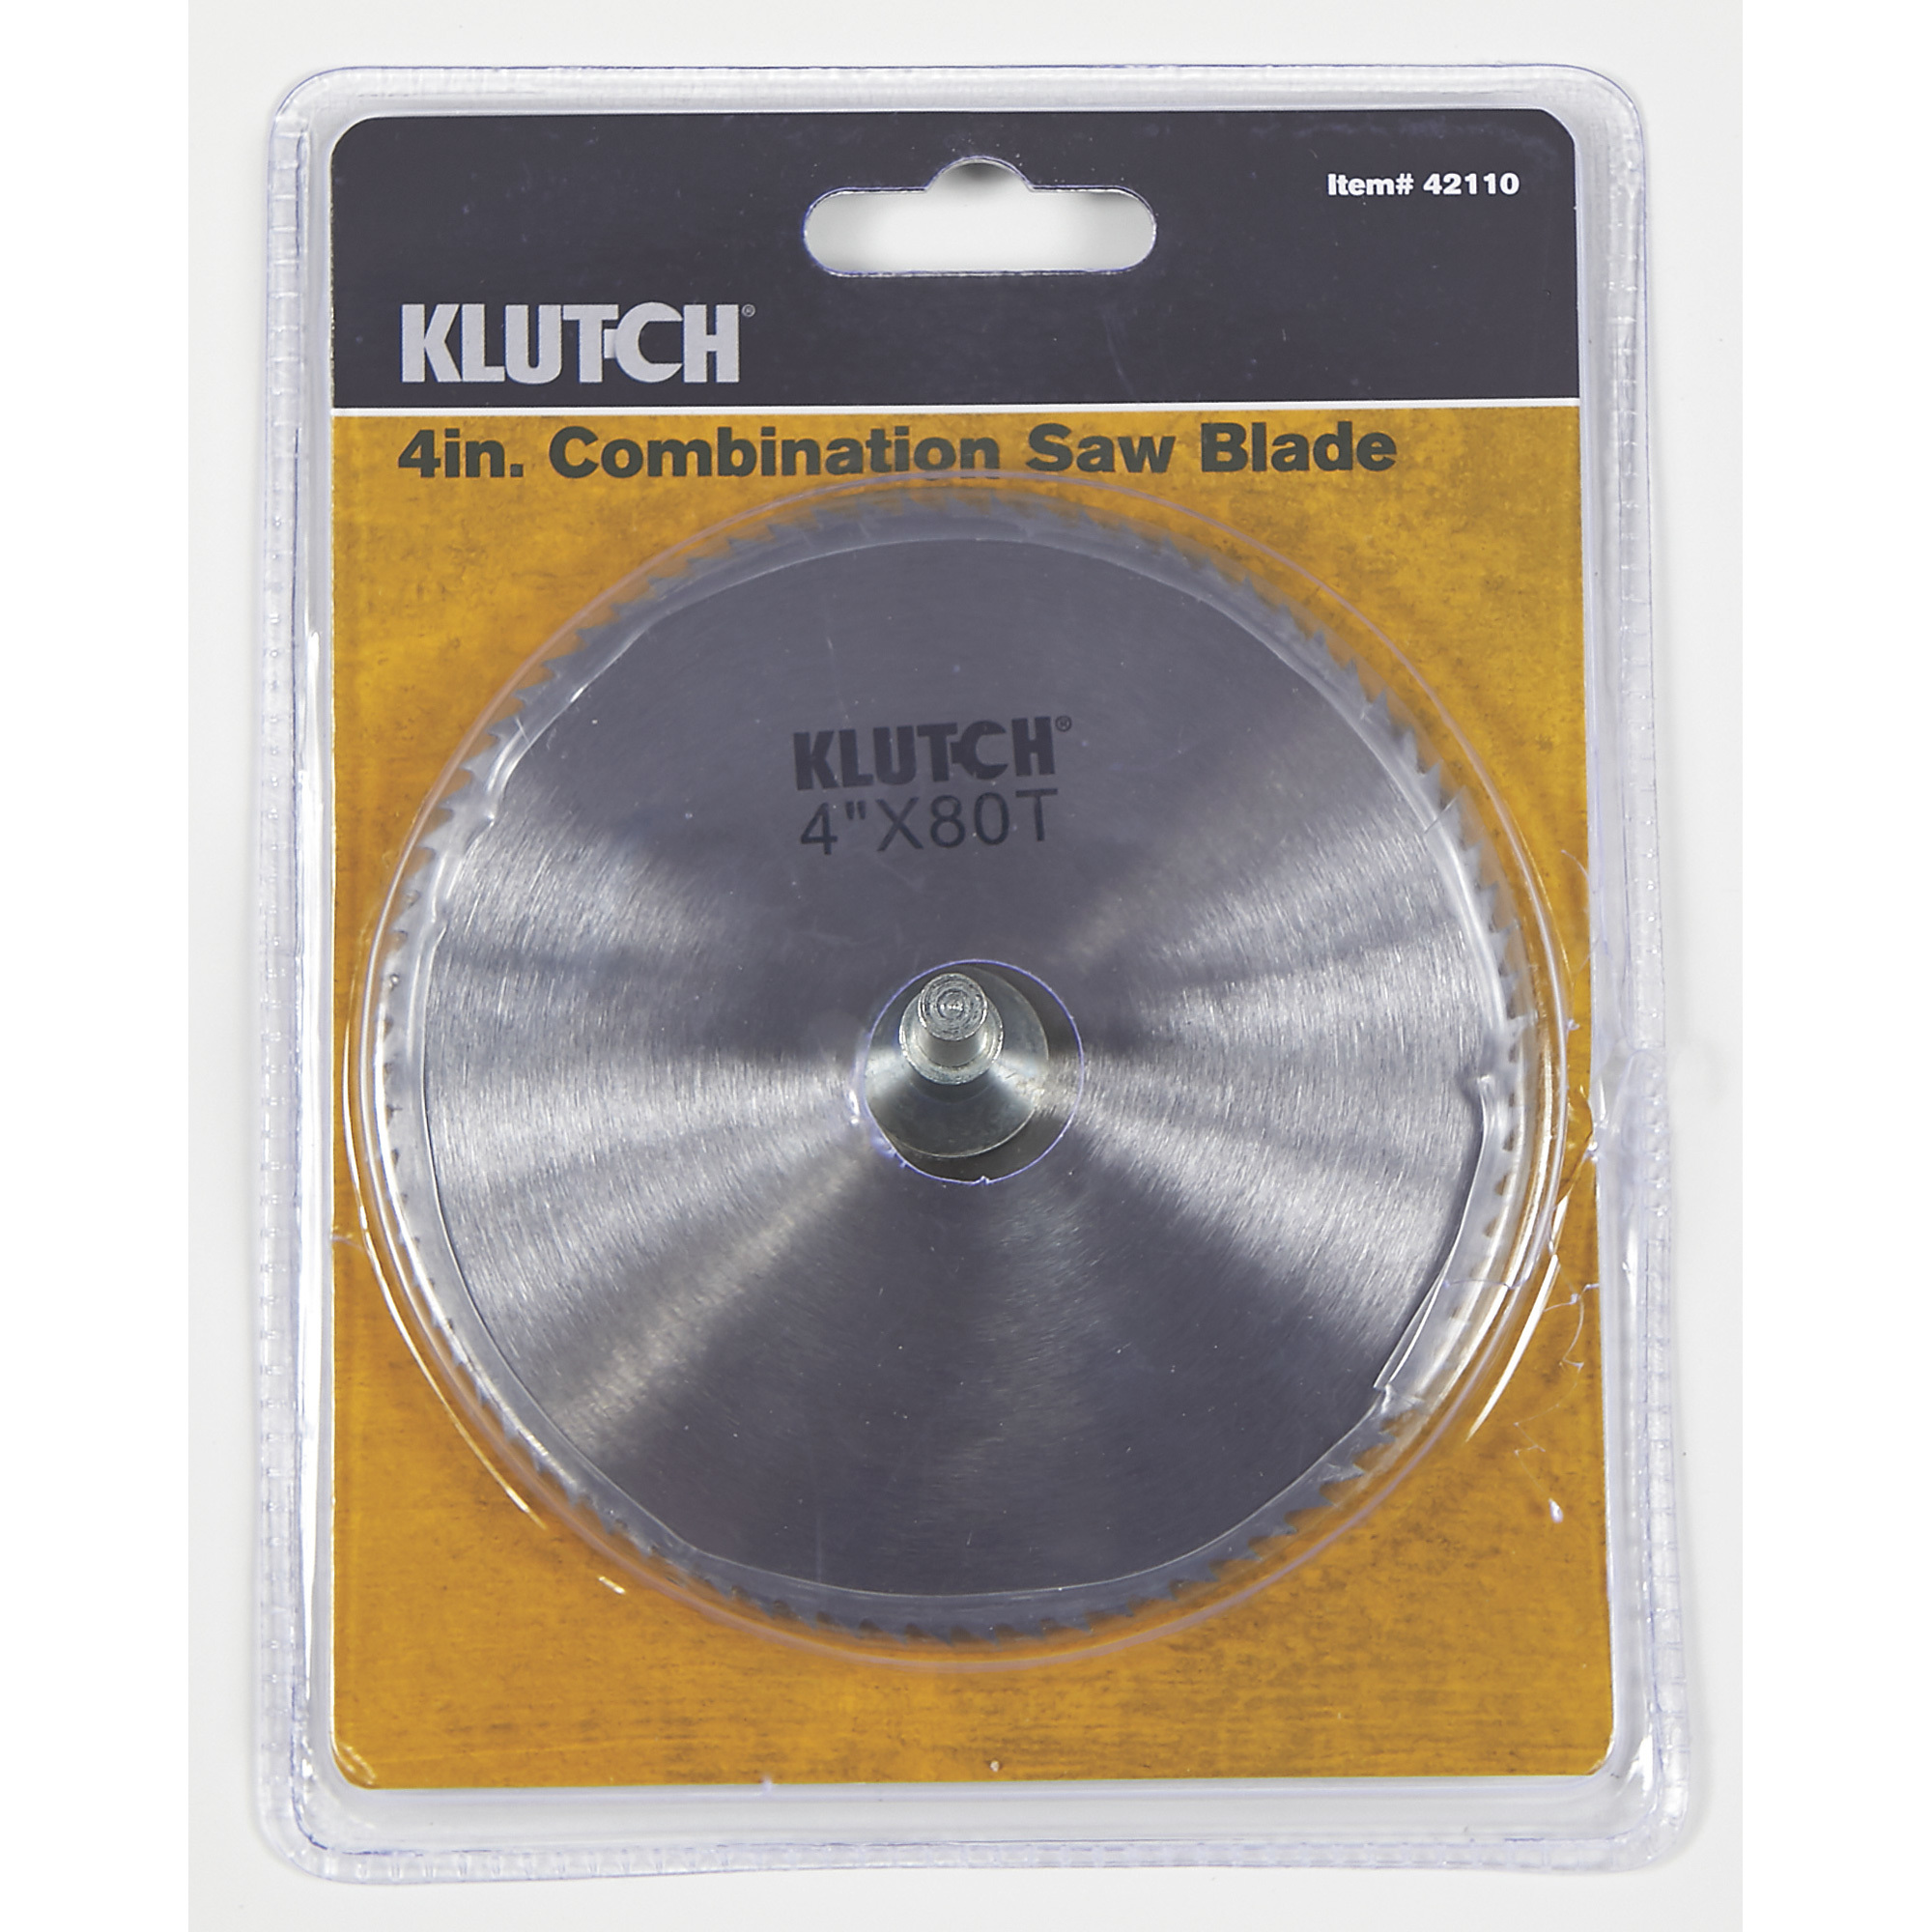 Klutch Combination Circular Saw Blade, 4Inch, 80 Tooth